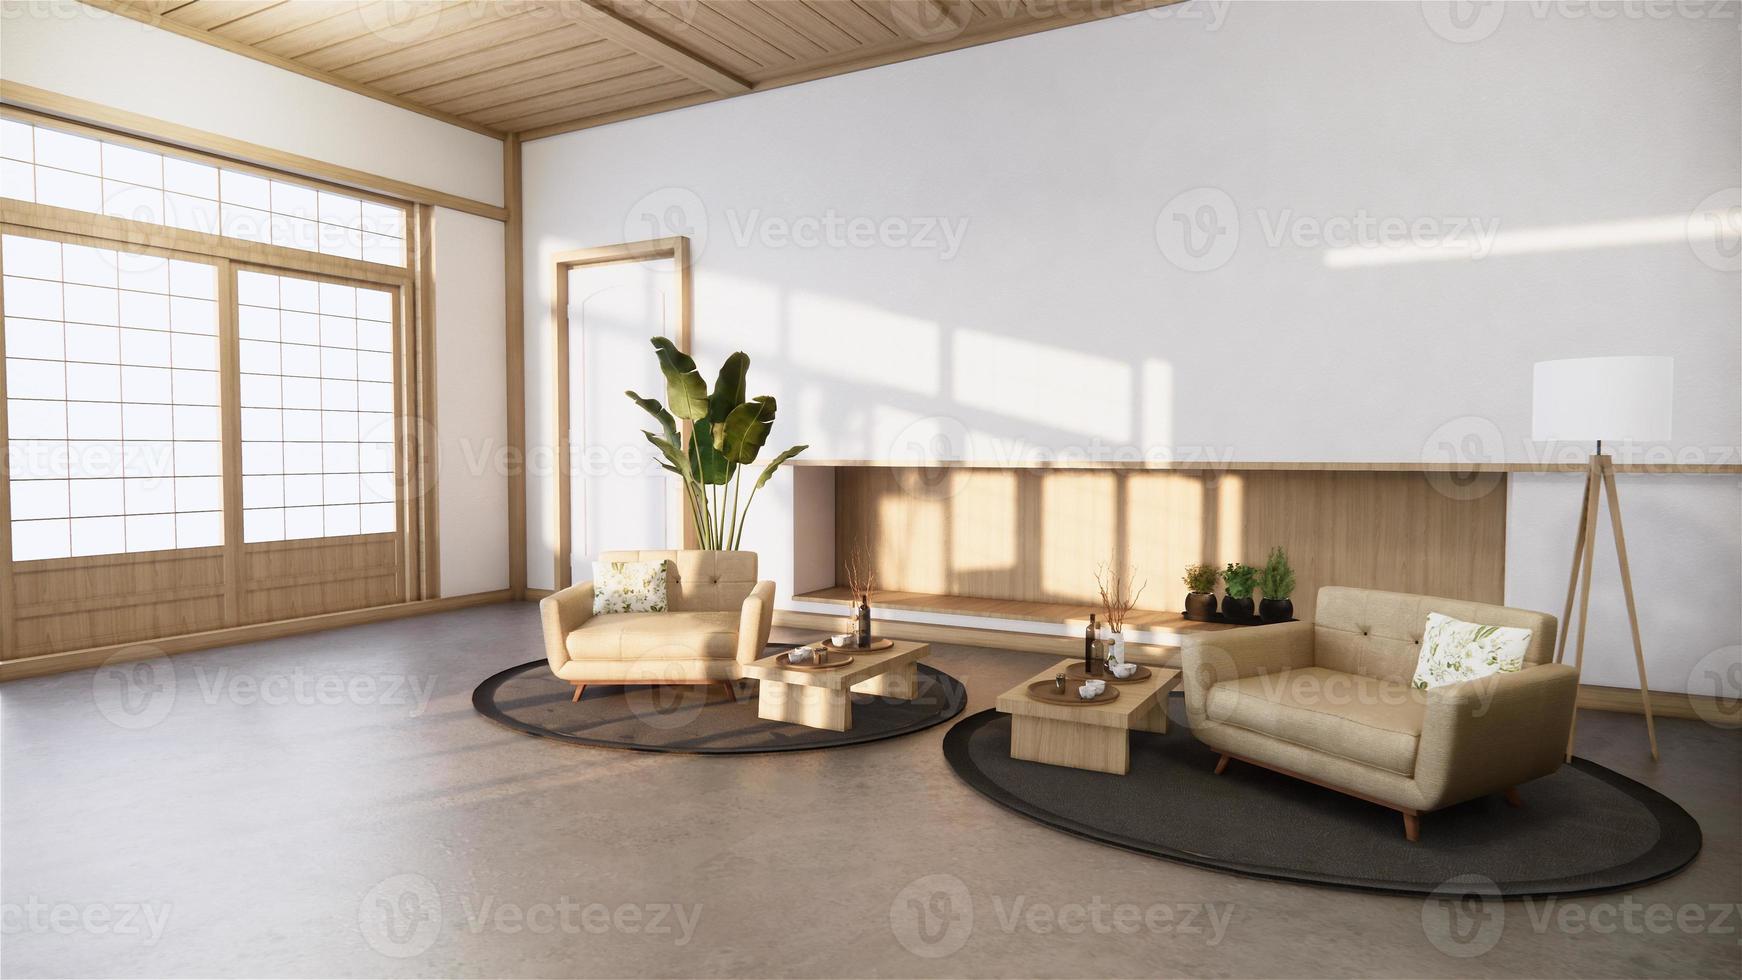 rum zen stil och dekoration trä design, jord tone.3d rendering foto